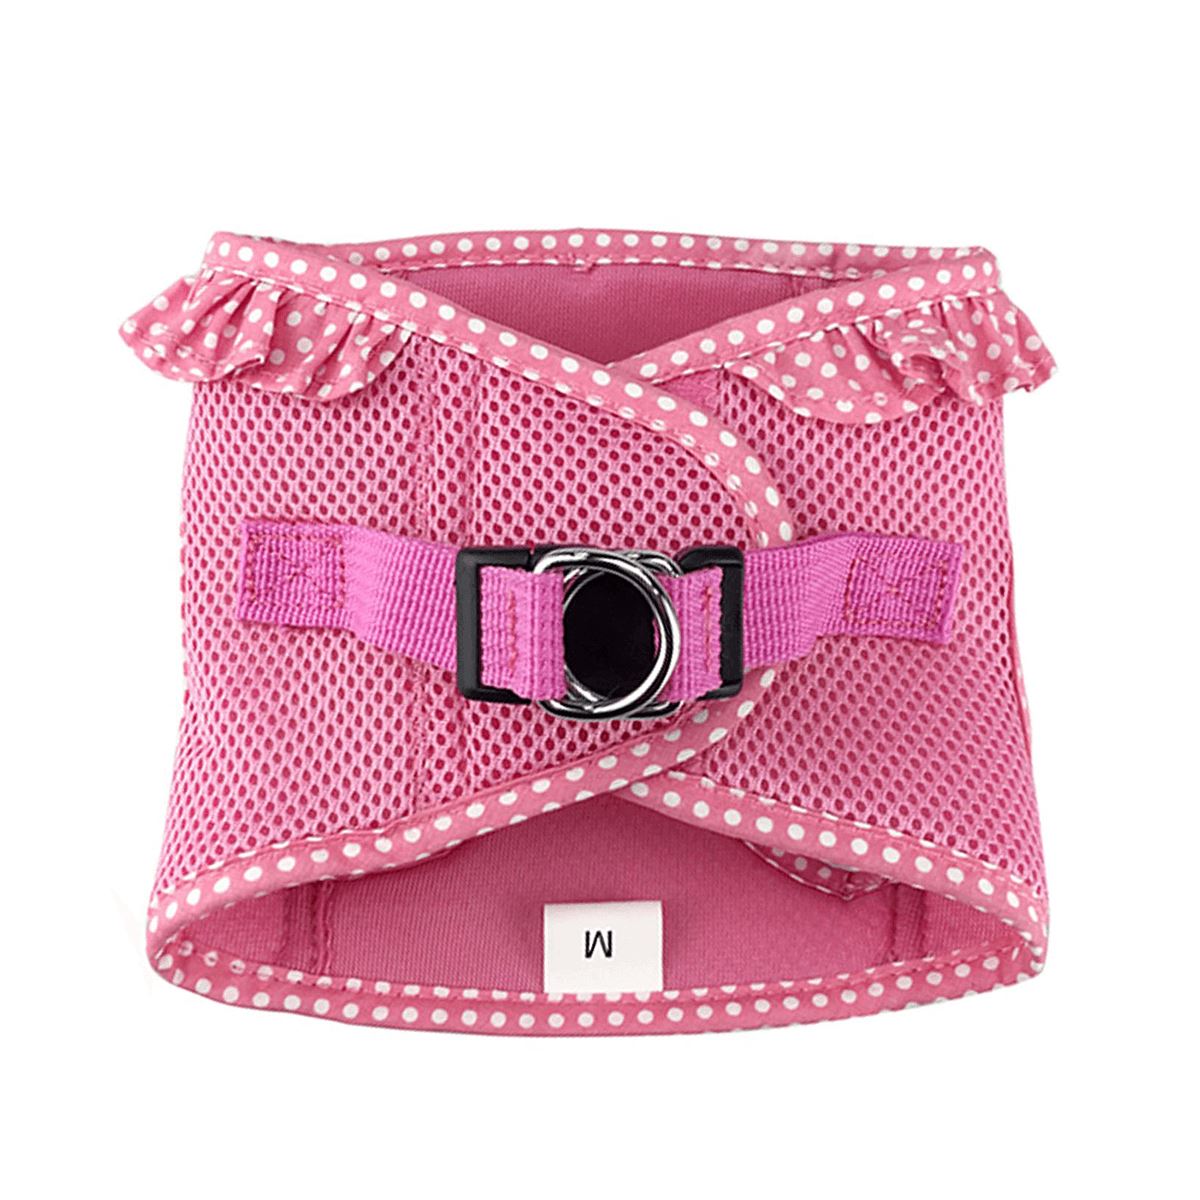 American River Choke Free Dog Harness in Pink Polka Dot | Pawlicious & Company